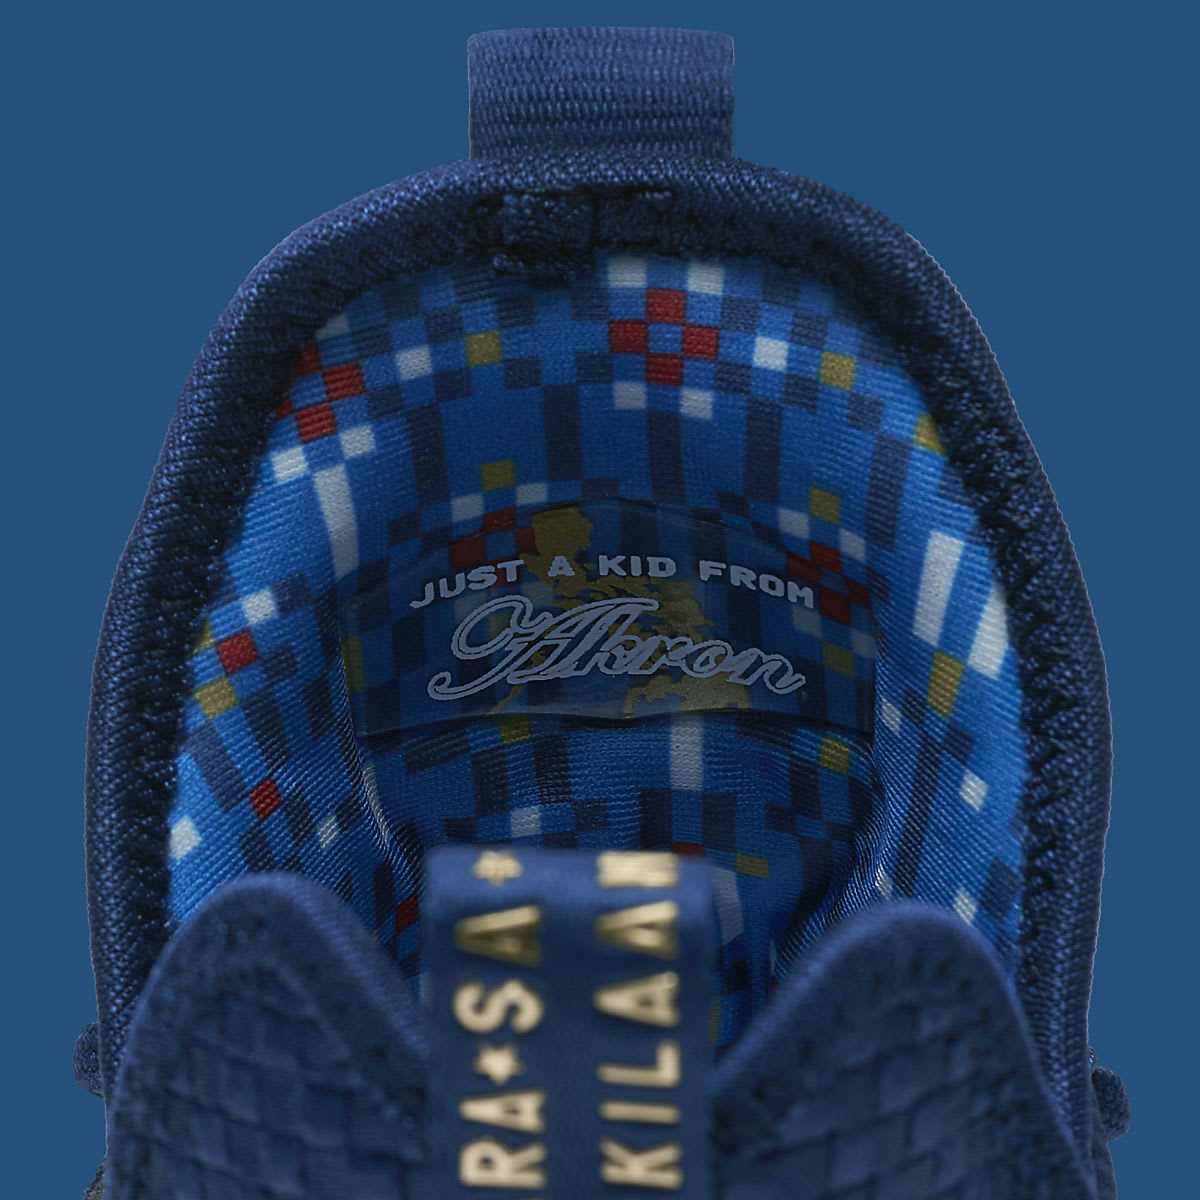 Nike LeBron 14 Agimat Global Release Date 952402-400